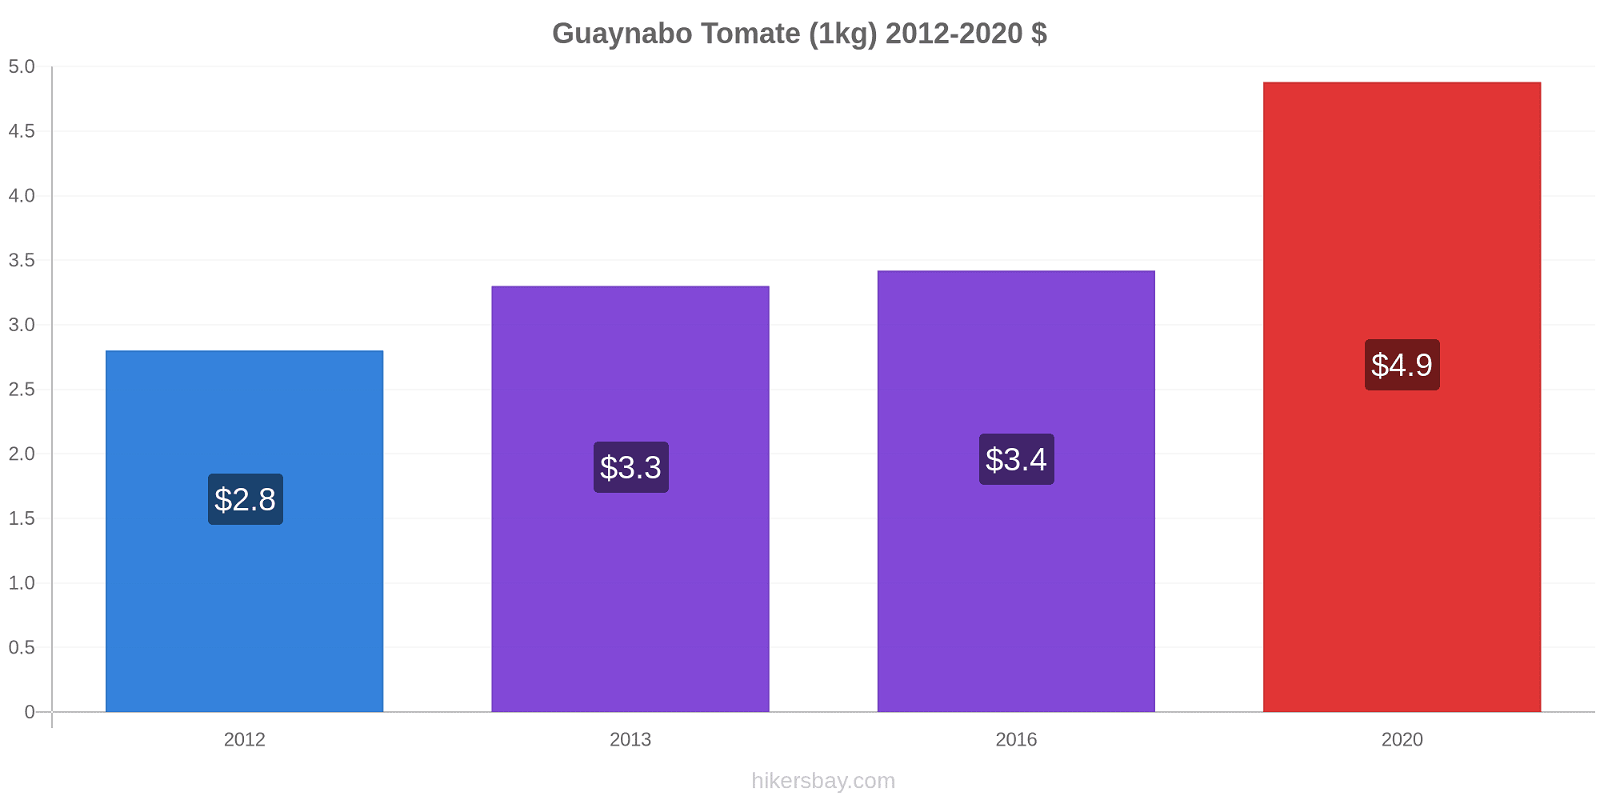 Guaynabo changements de prix Tomate (1kg) hikersbay.com